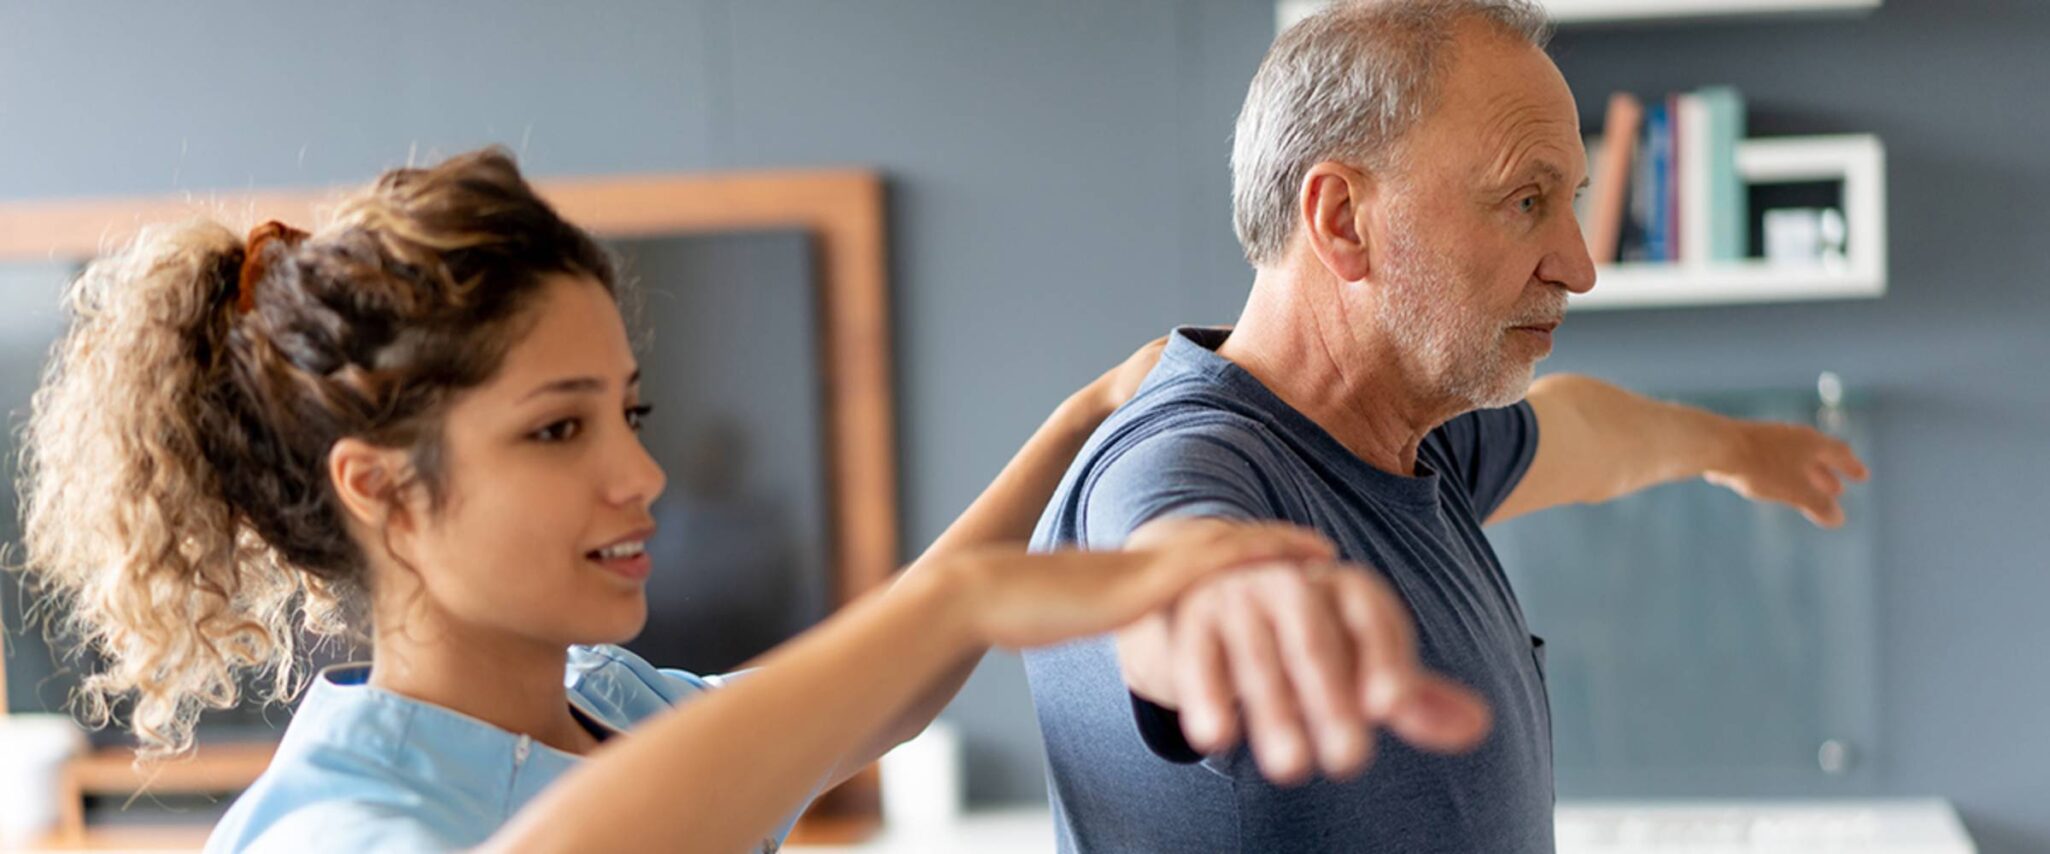 A physical therapist helps a senior man do balance exercises